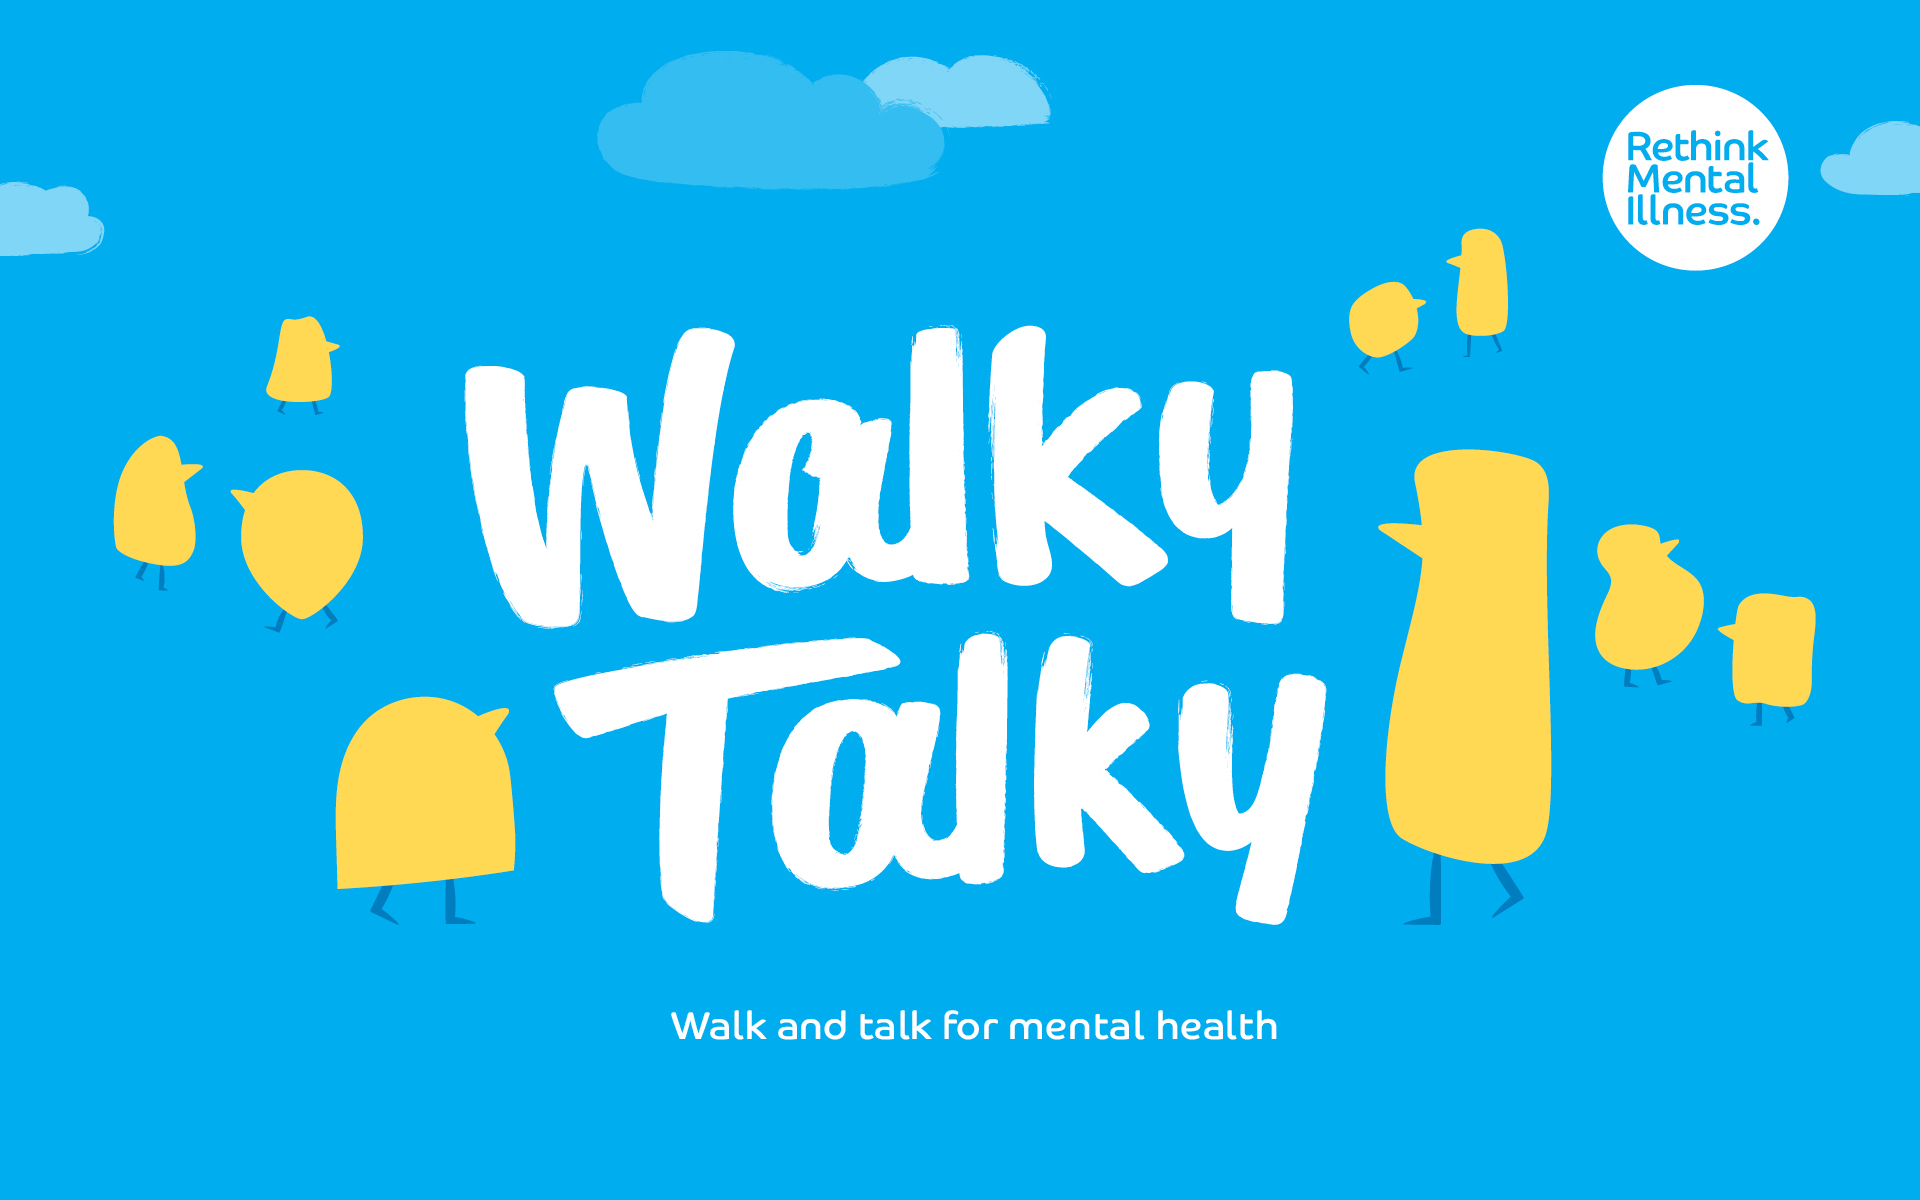 Walky Talky campaign visual identity design